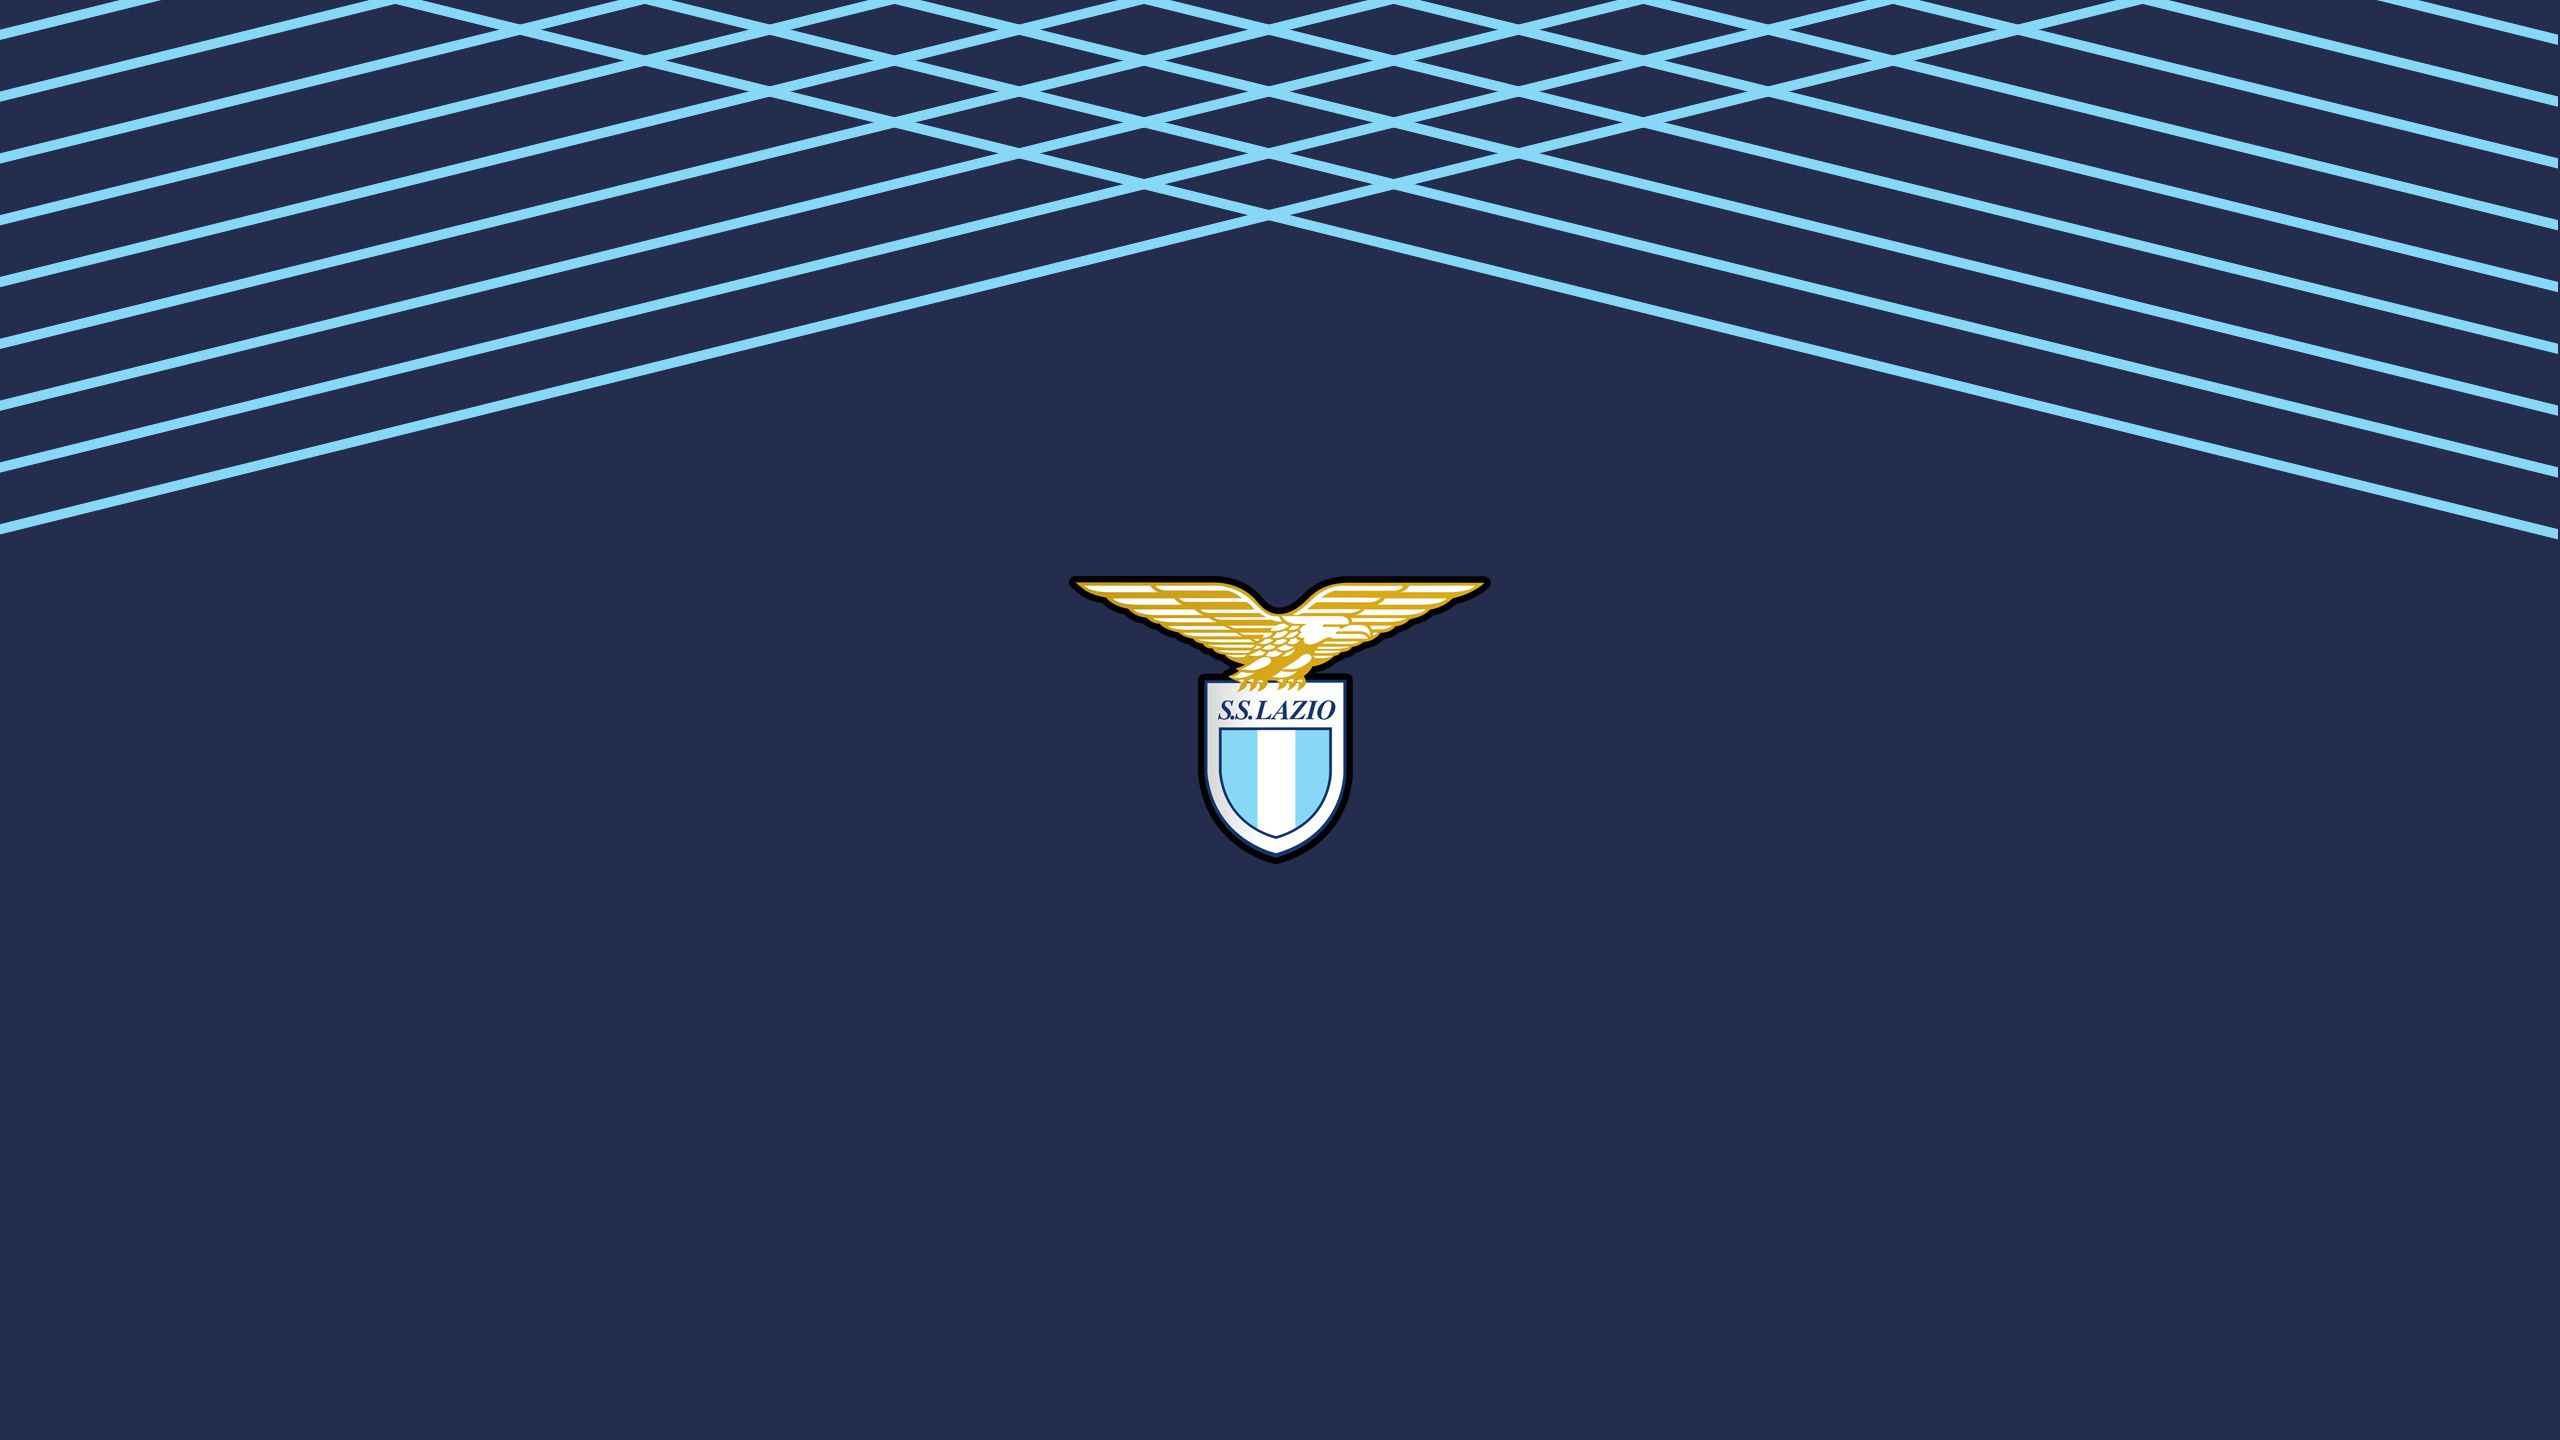 Descarga gratuita de fondo de pantalla para móvil de Fútbol, Logo, Emblema, Deporte, Ss Lazio.